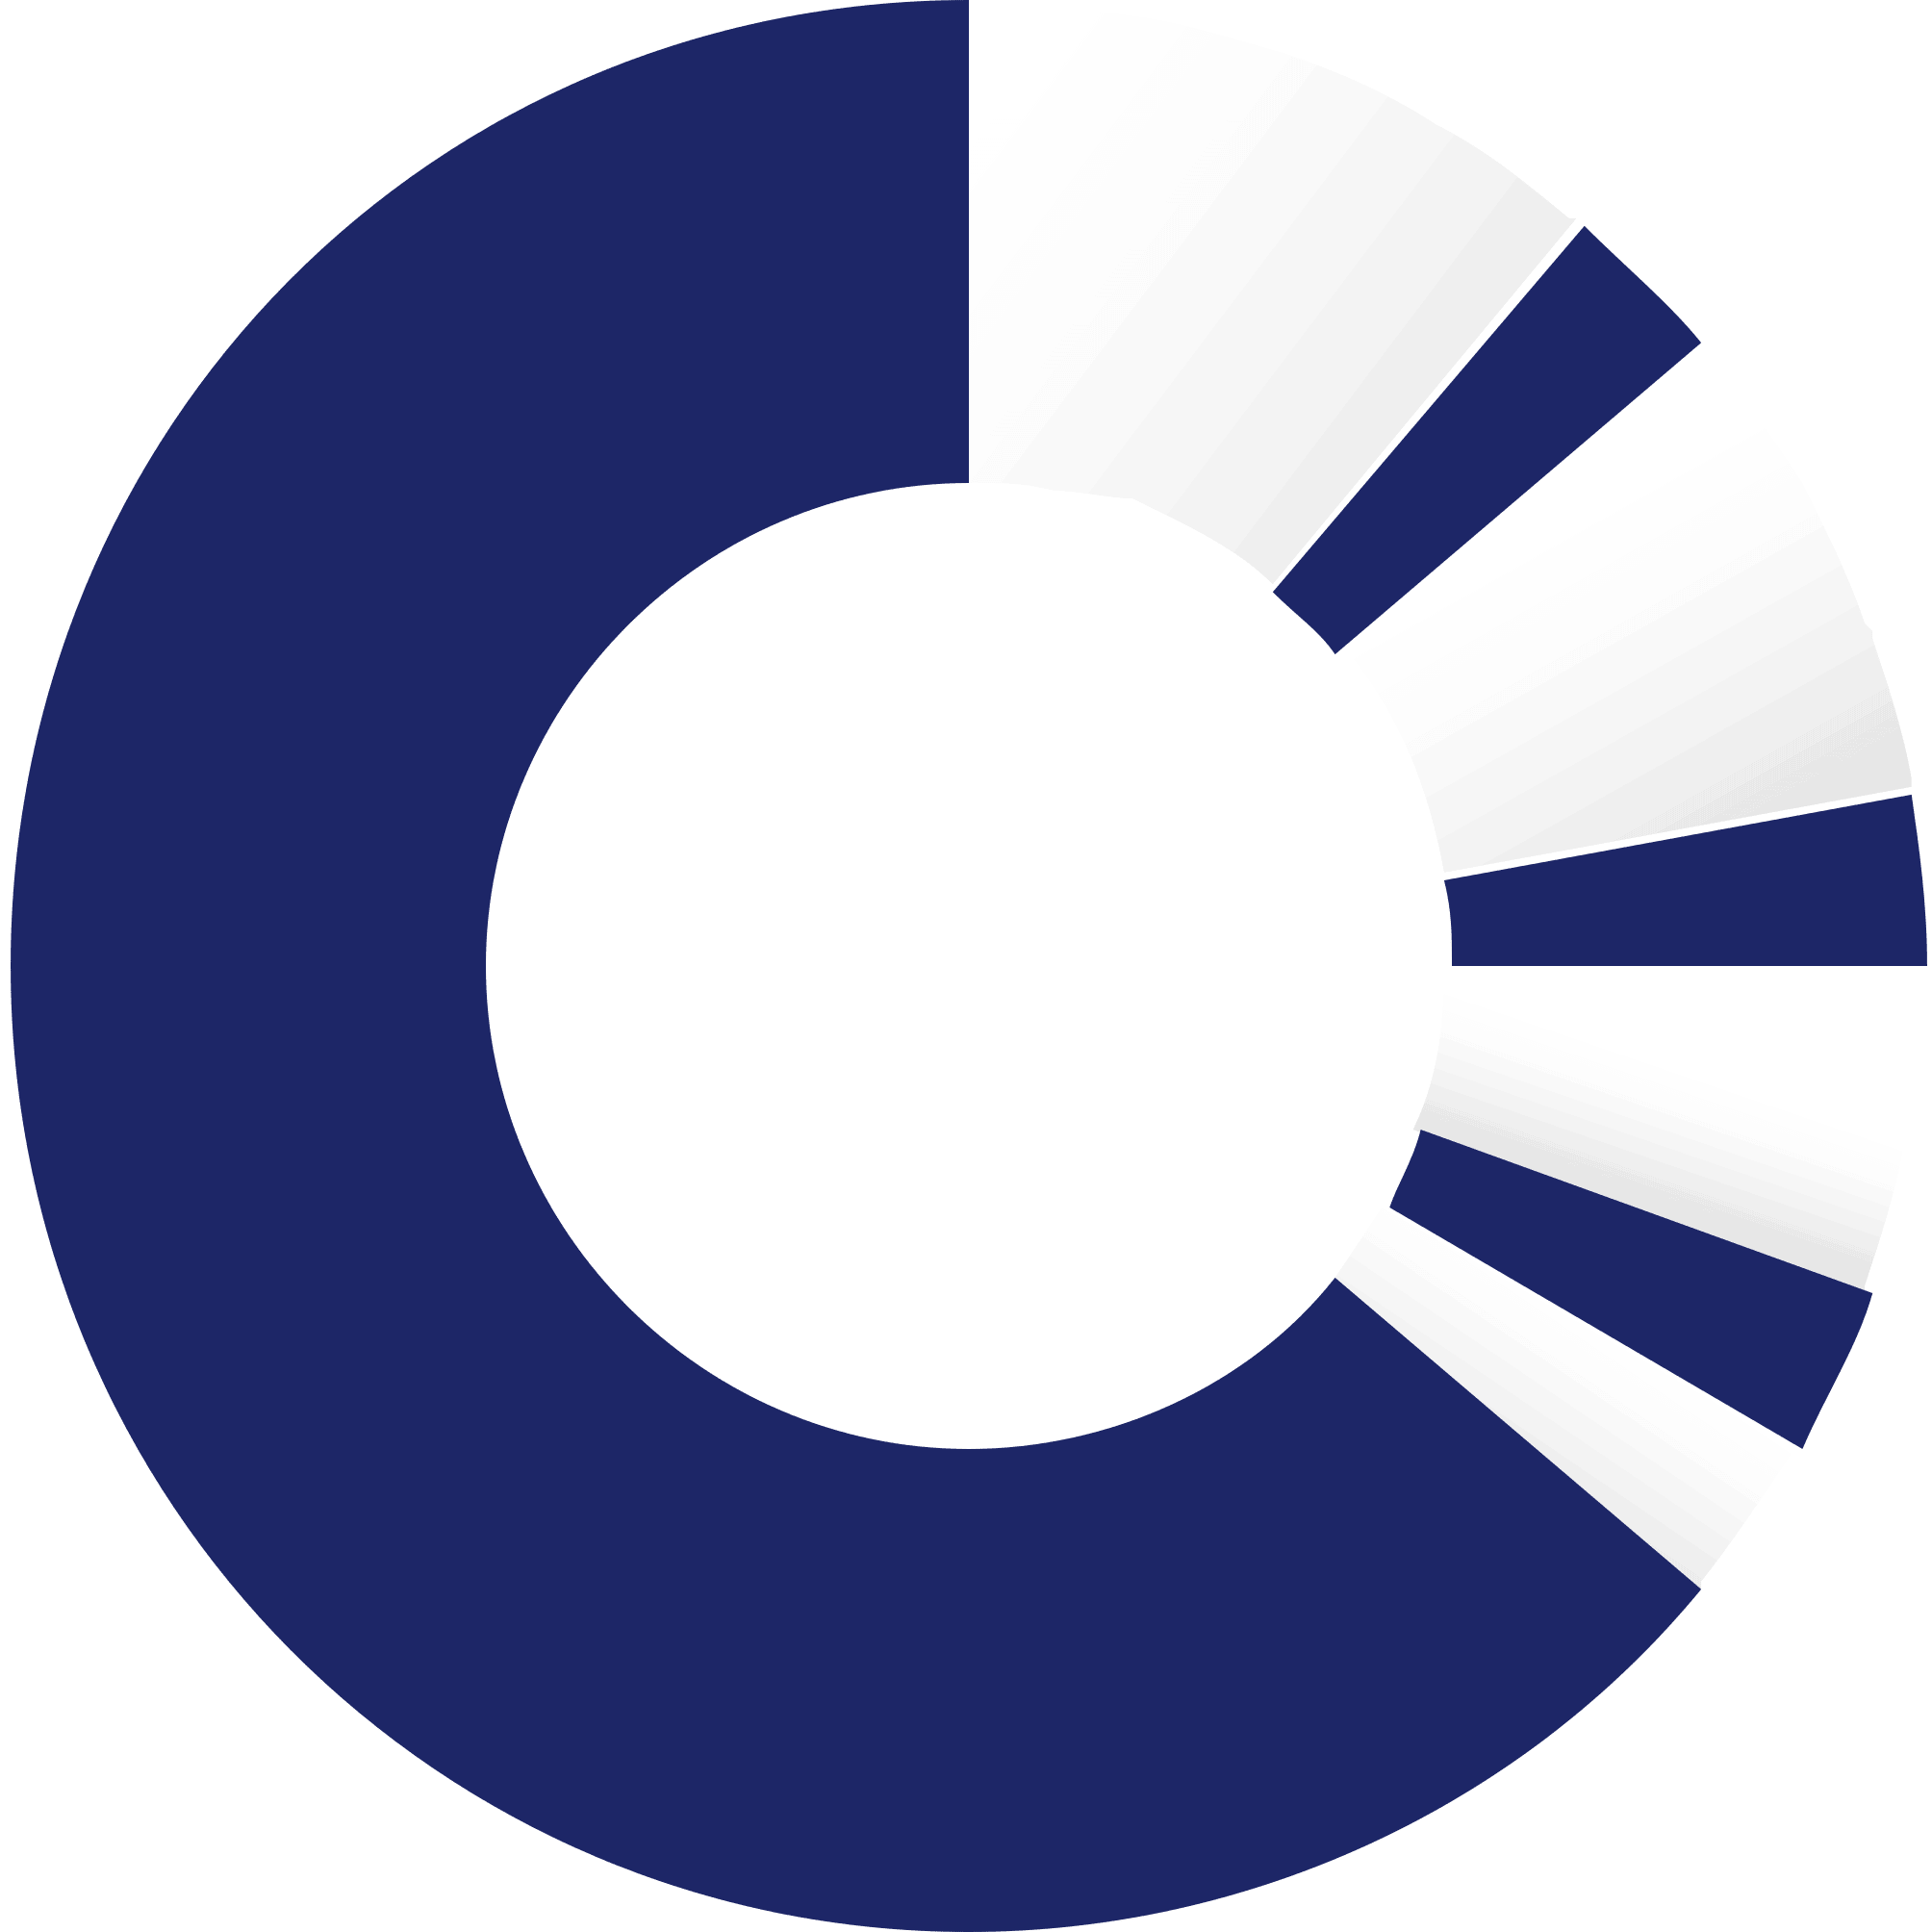 OriginTrail logo in png format